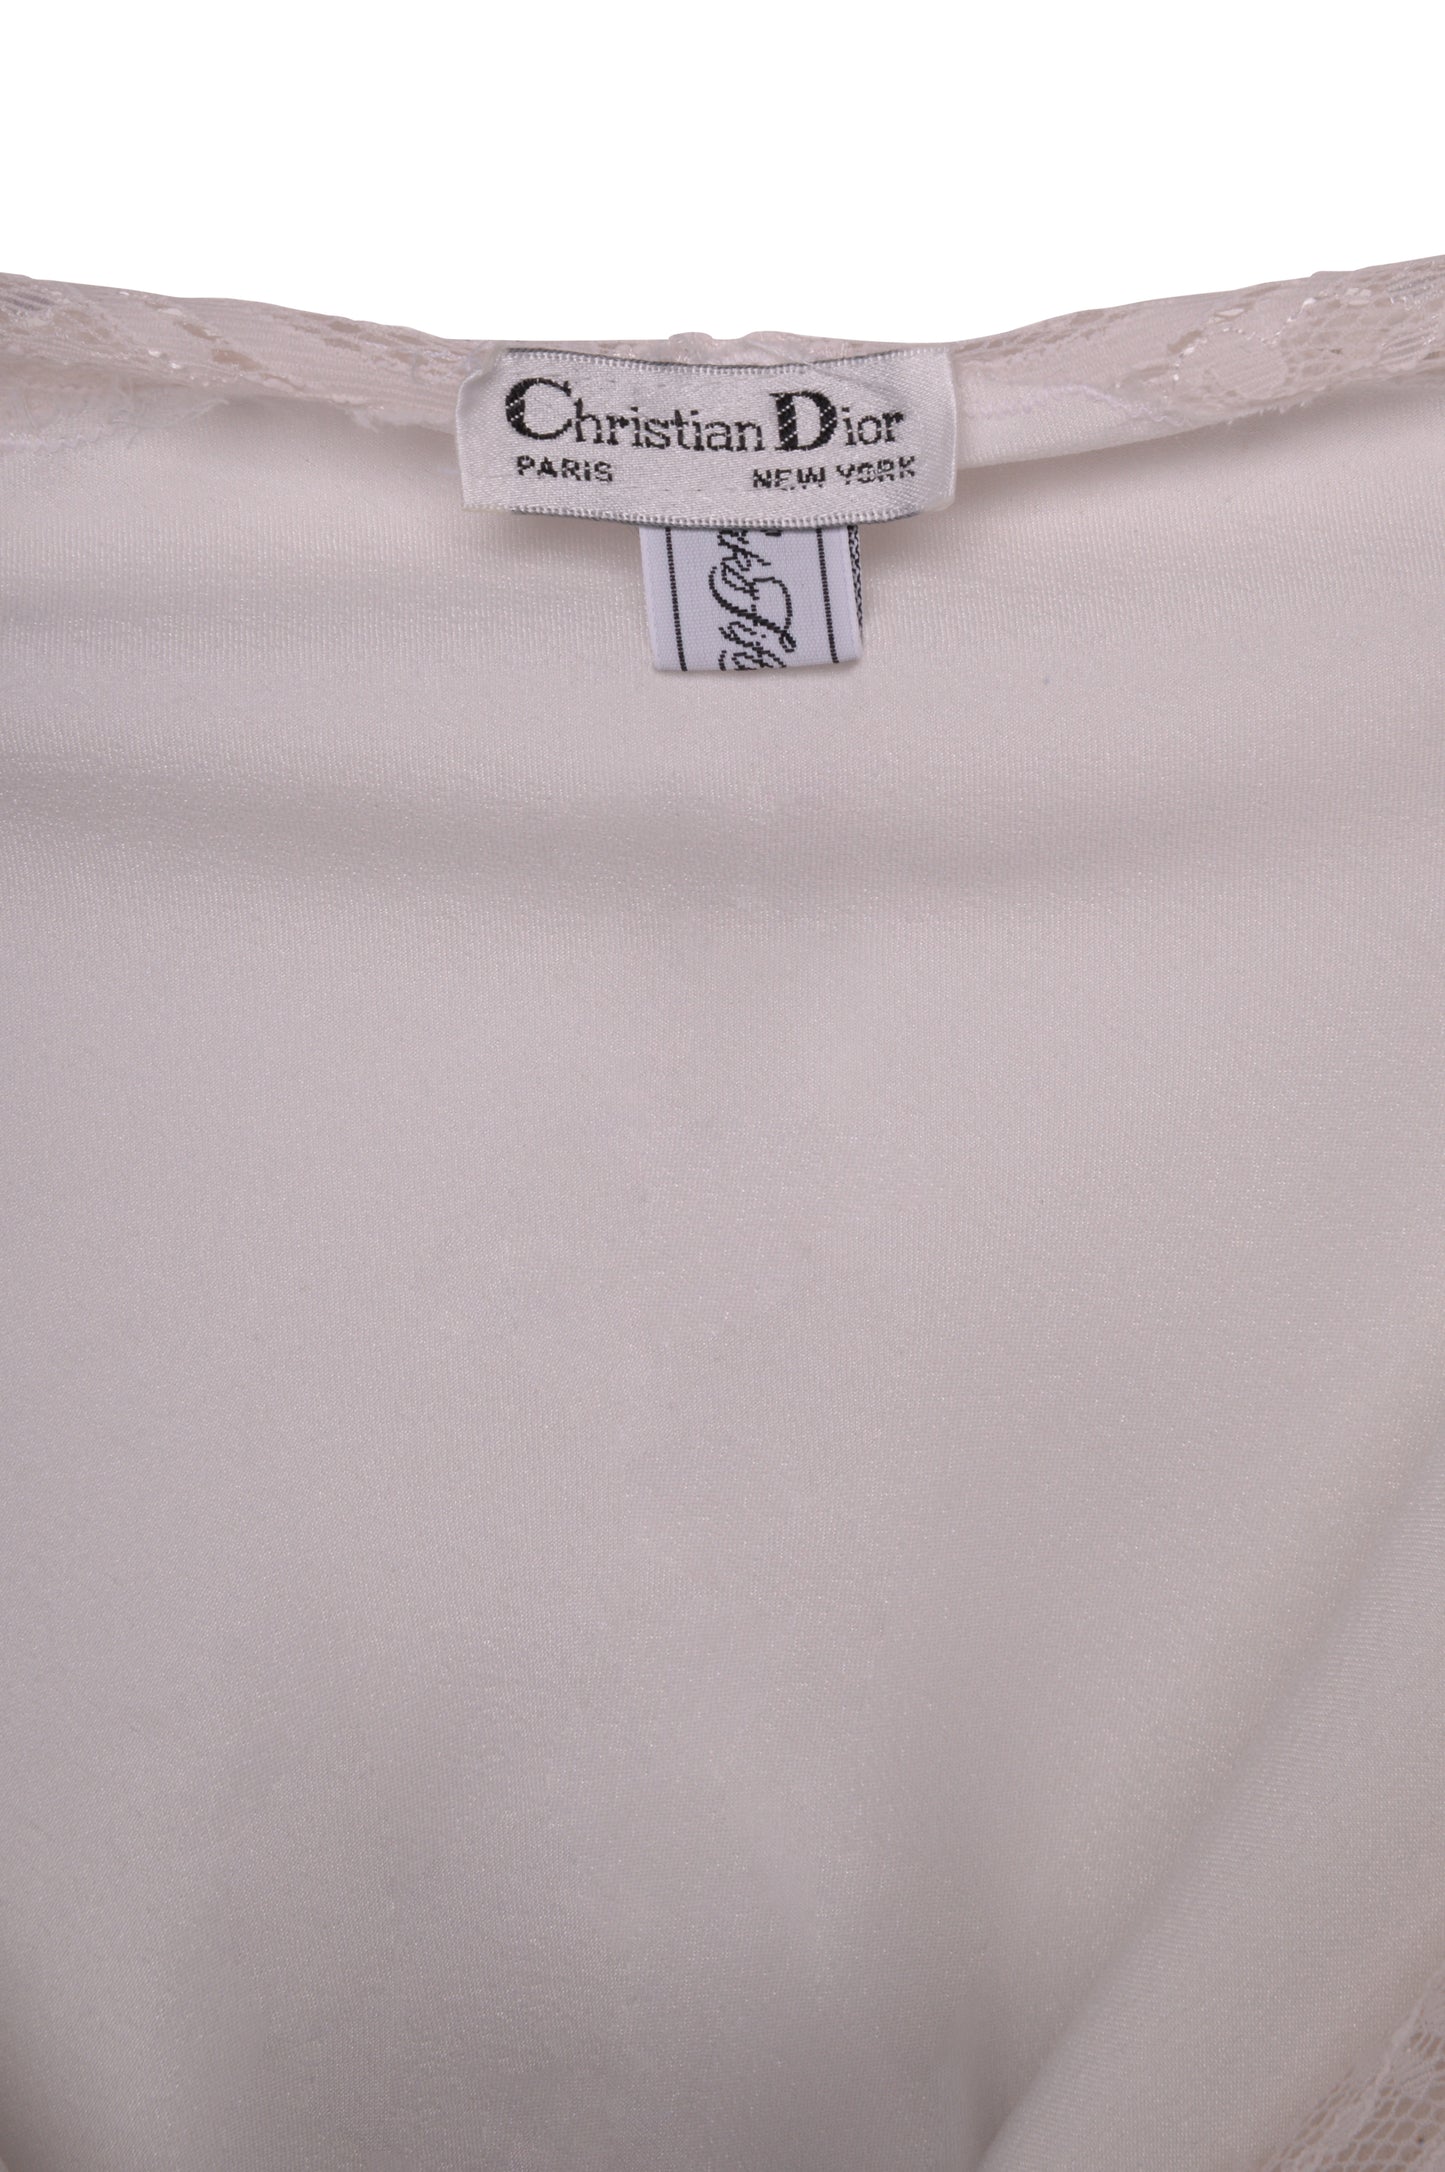 Christian Dior Lace Slip USA